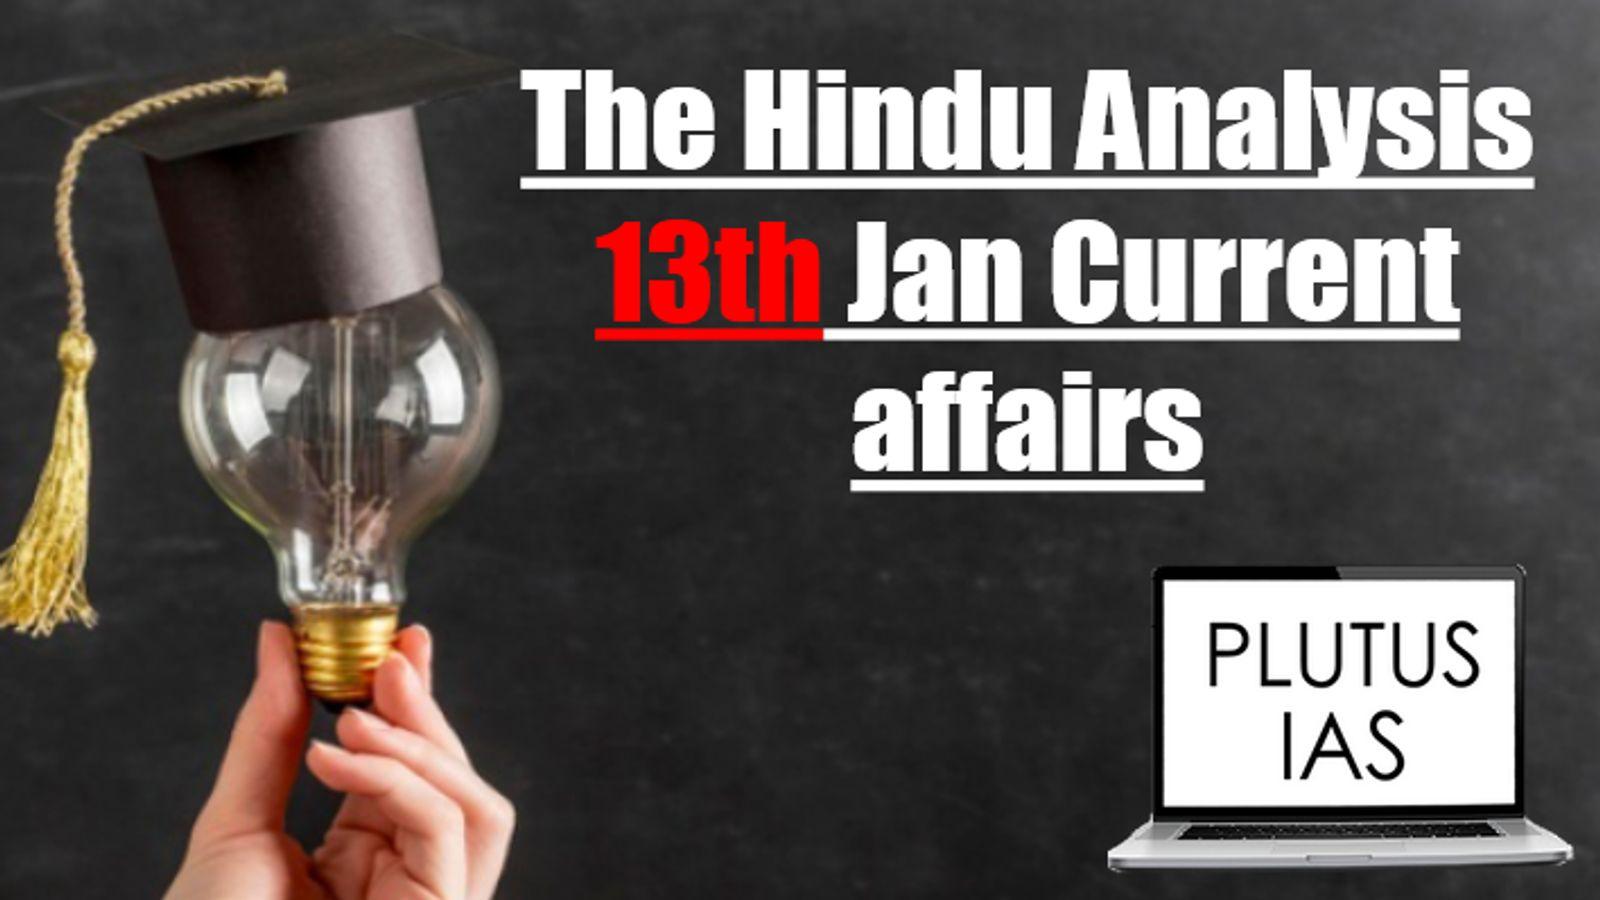 The Hindu Analysis 13th January